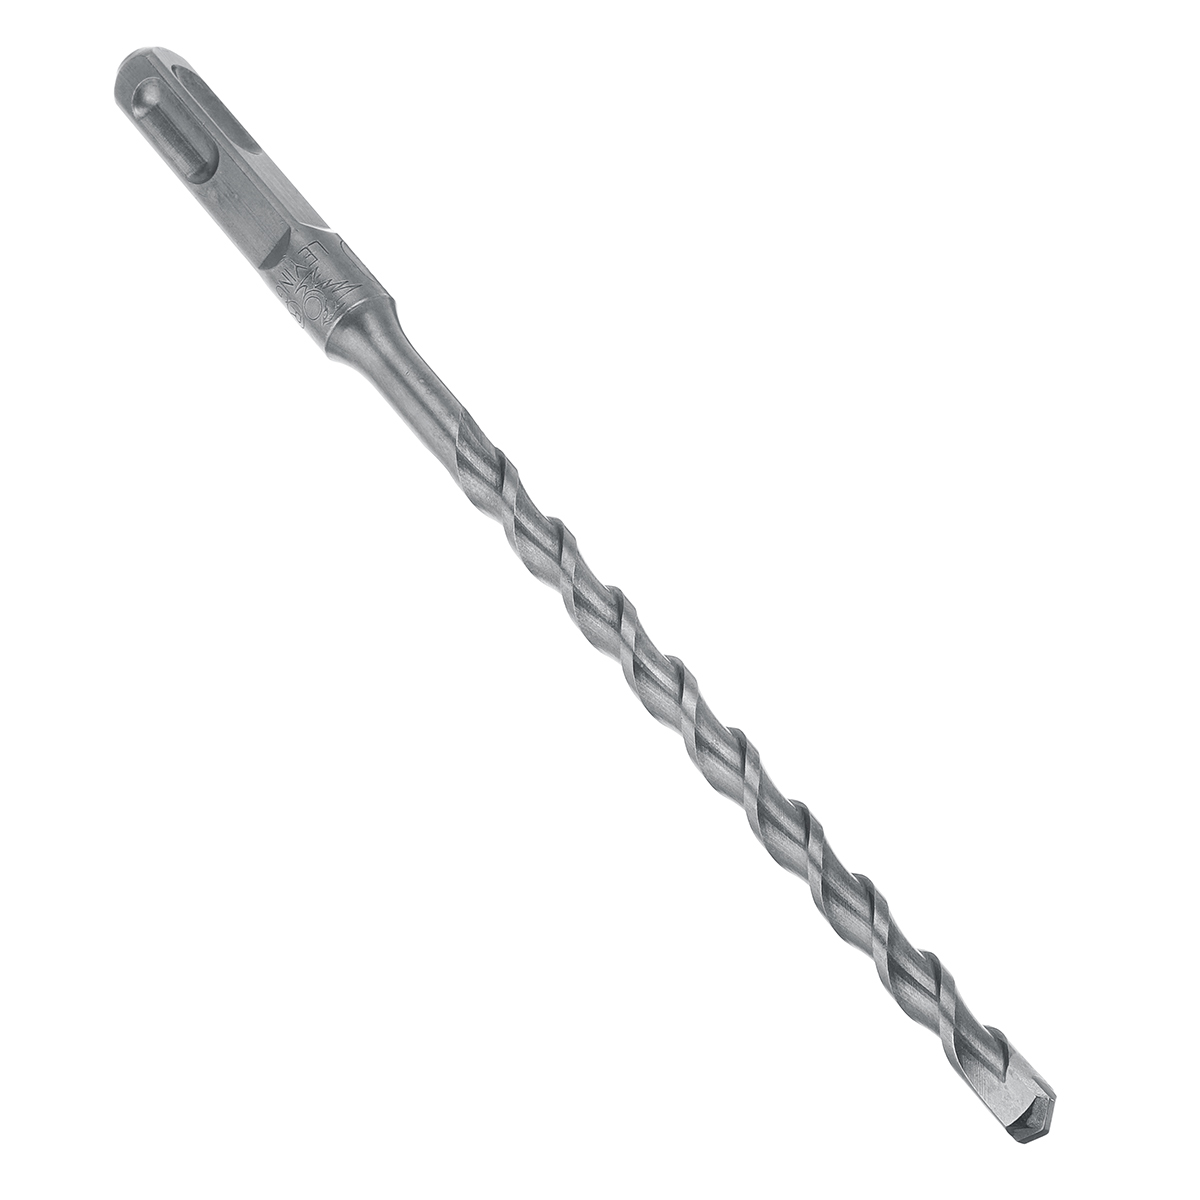 Masonry-Hammer-Drill-Bit-for-Tiles-Concrete-Brick-Hardened-Chrome-Alloy-Steel-Flat-Drill-Bit-1651151-10